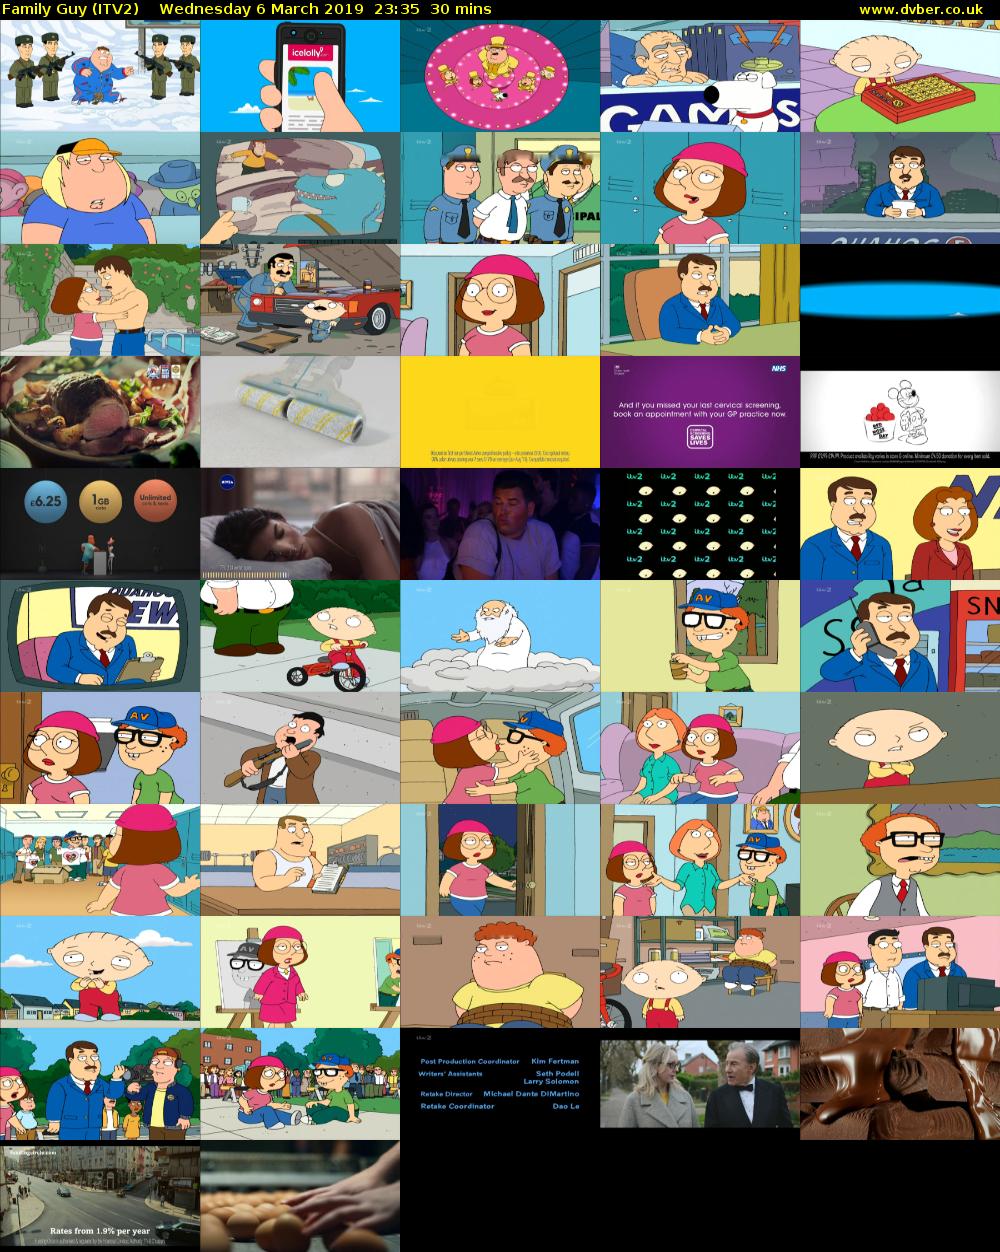 Family Guy (ITV2) Wednesday 6 March 2019 23:35 - 00:05